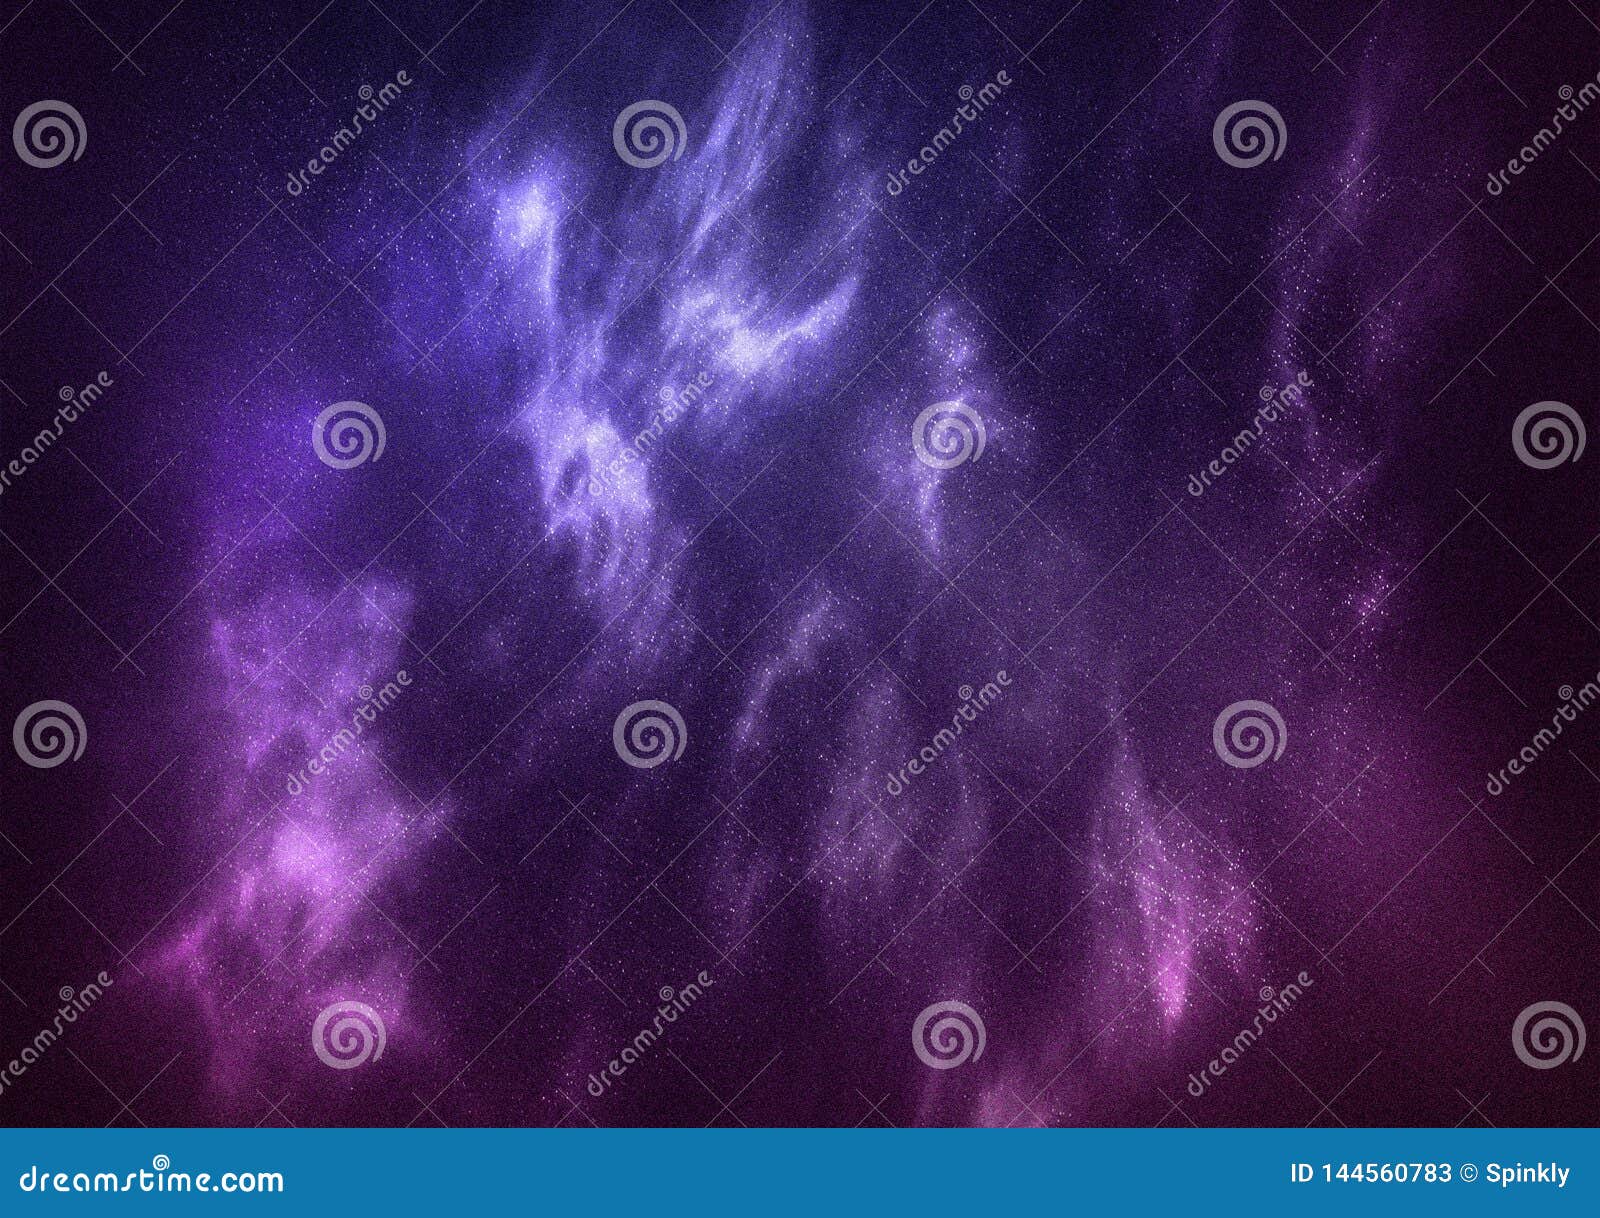 Galaxy Textured Wallpaper Background Design Stock Illustration